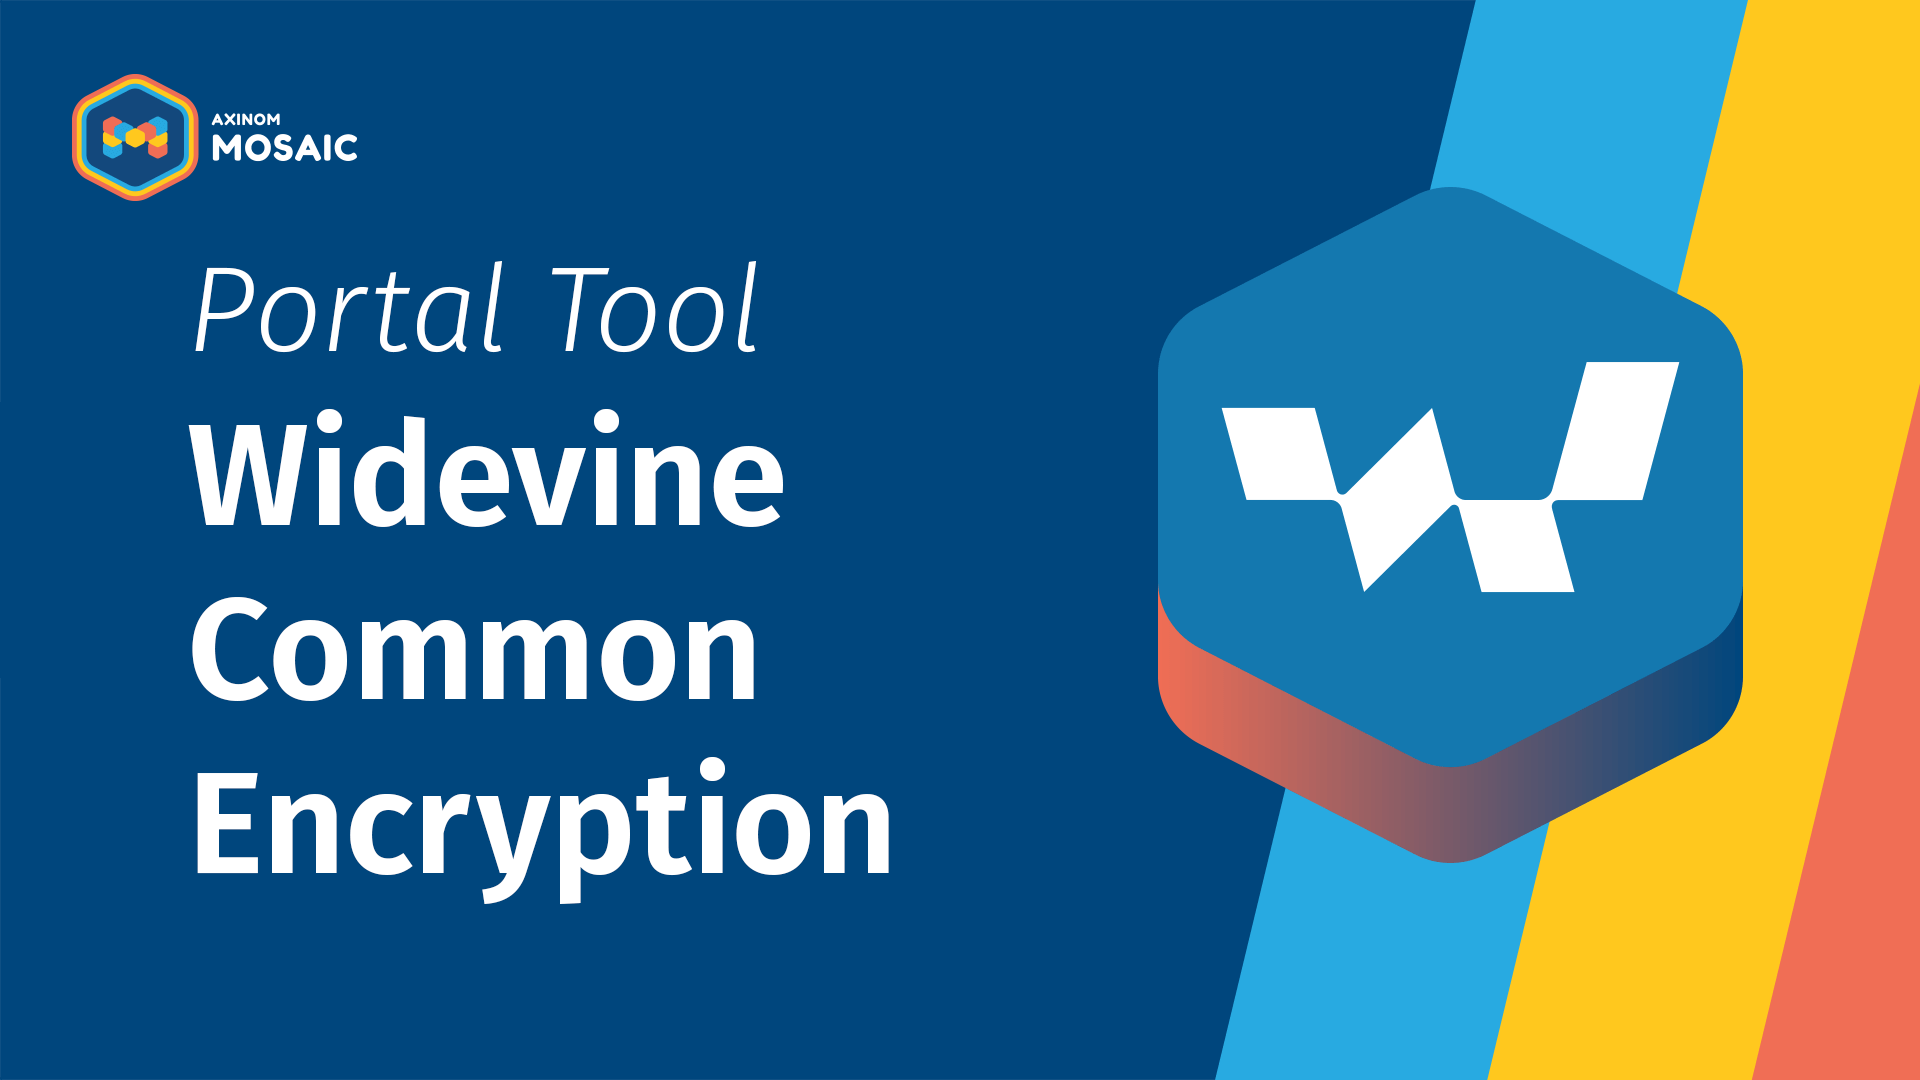 Portal tool: Widevine Common Encryption